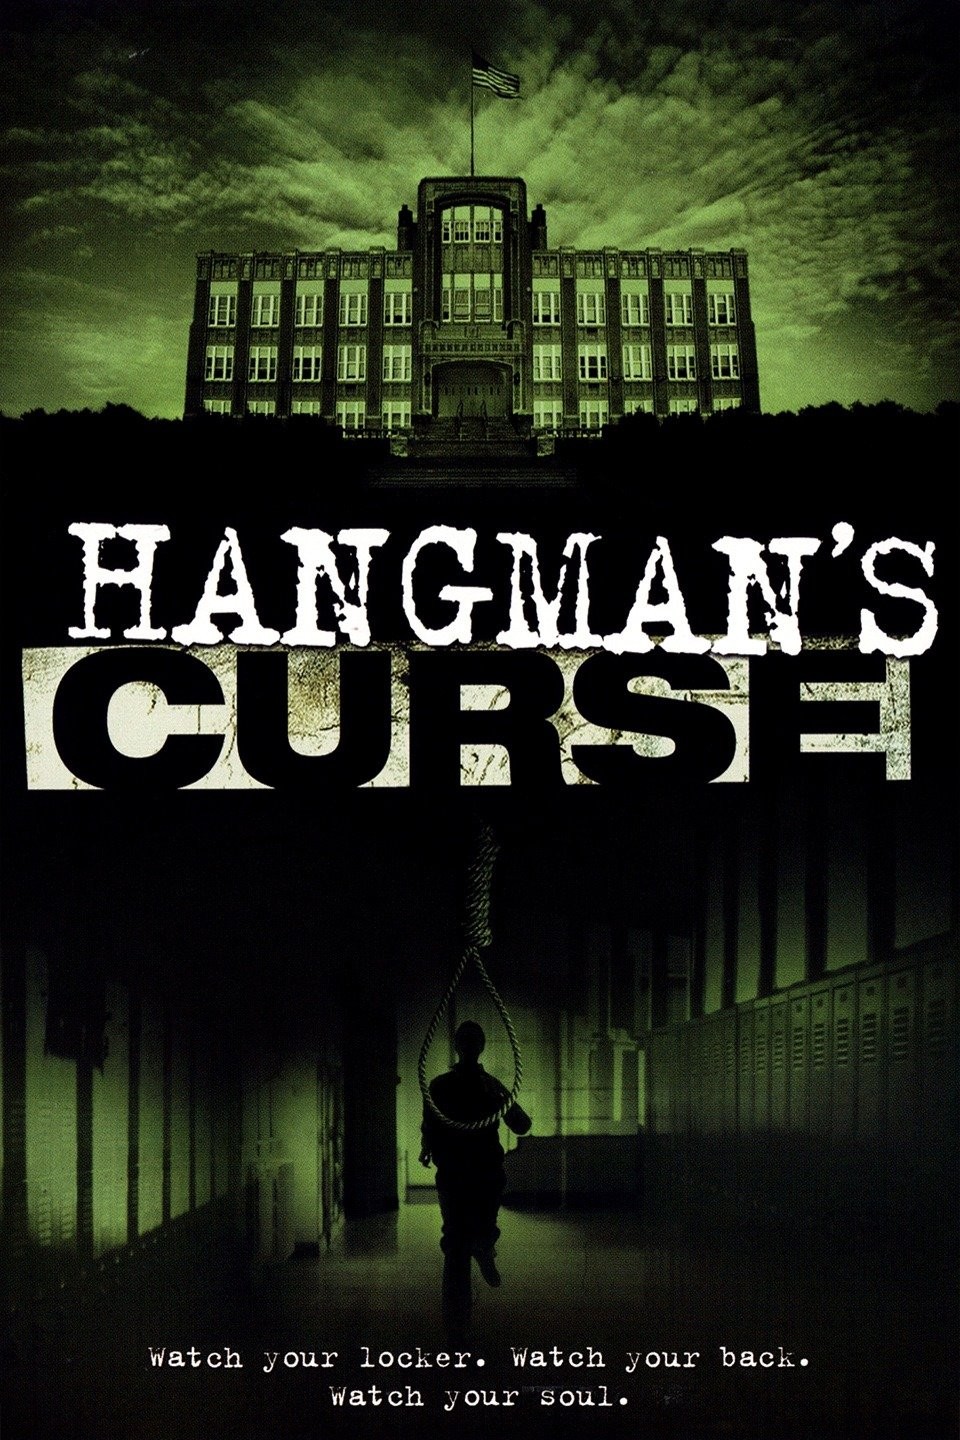  Hangman [DVD] : Movies & TV